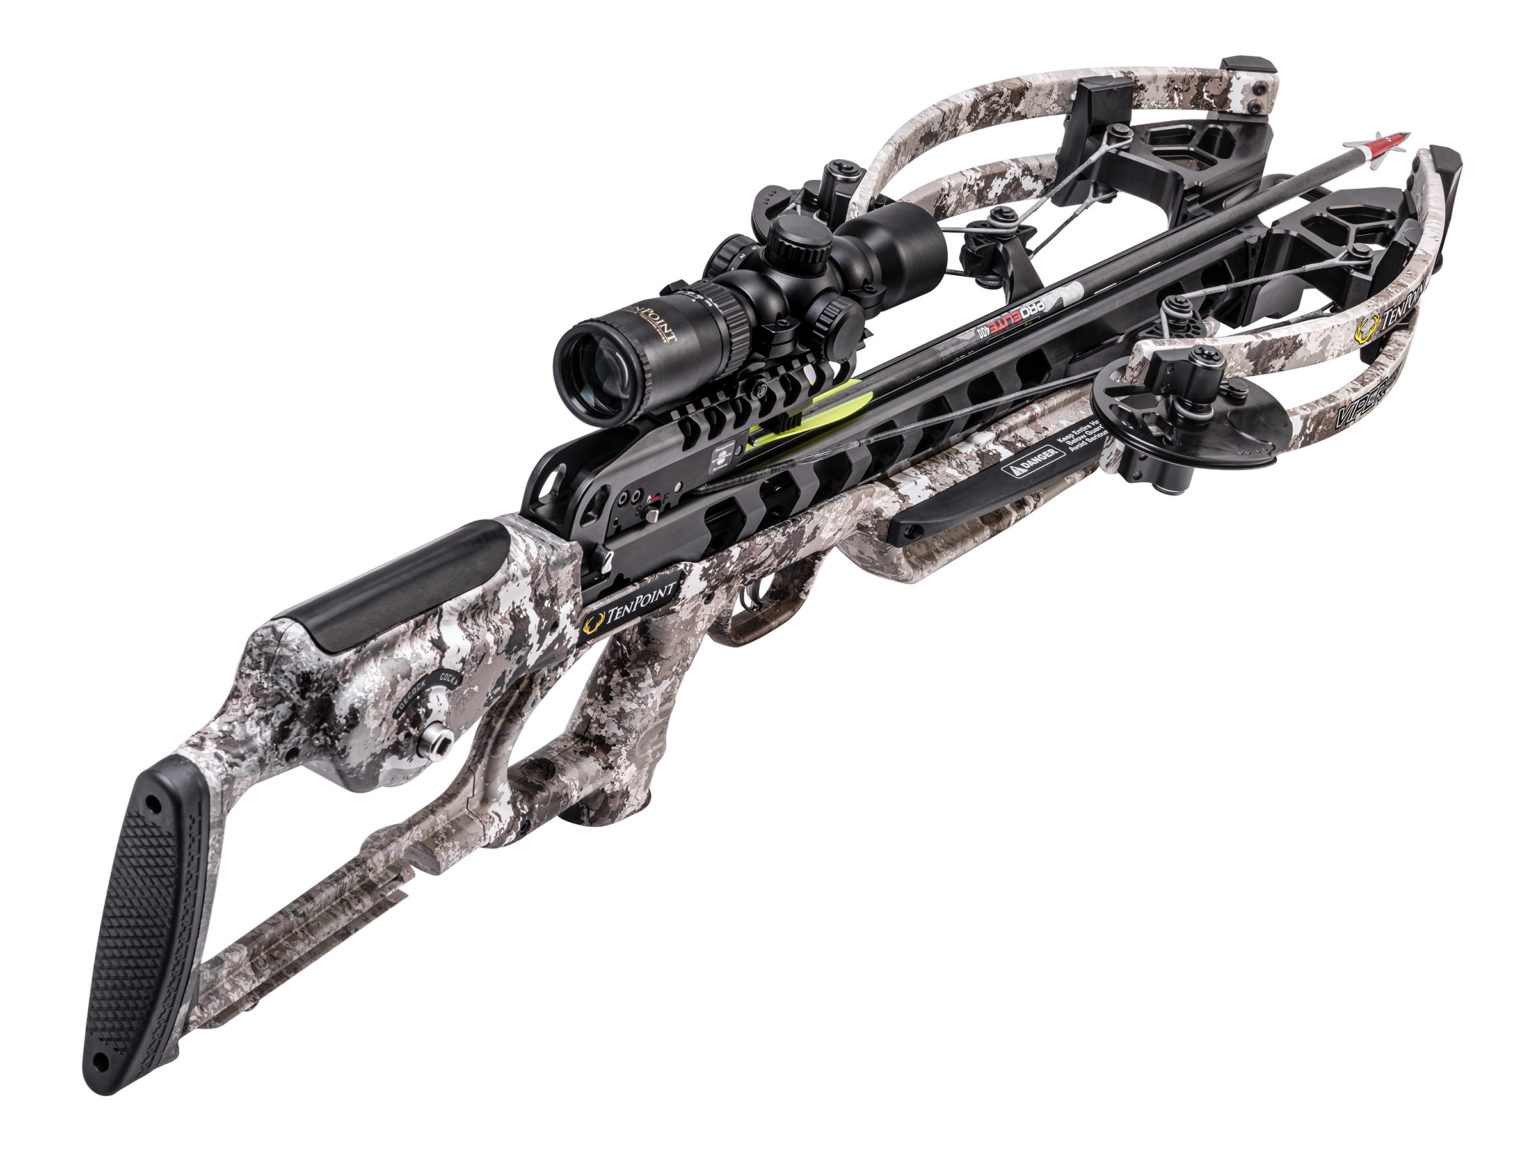 tenpoint crossbow viper s400